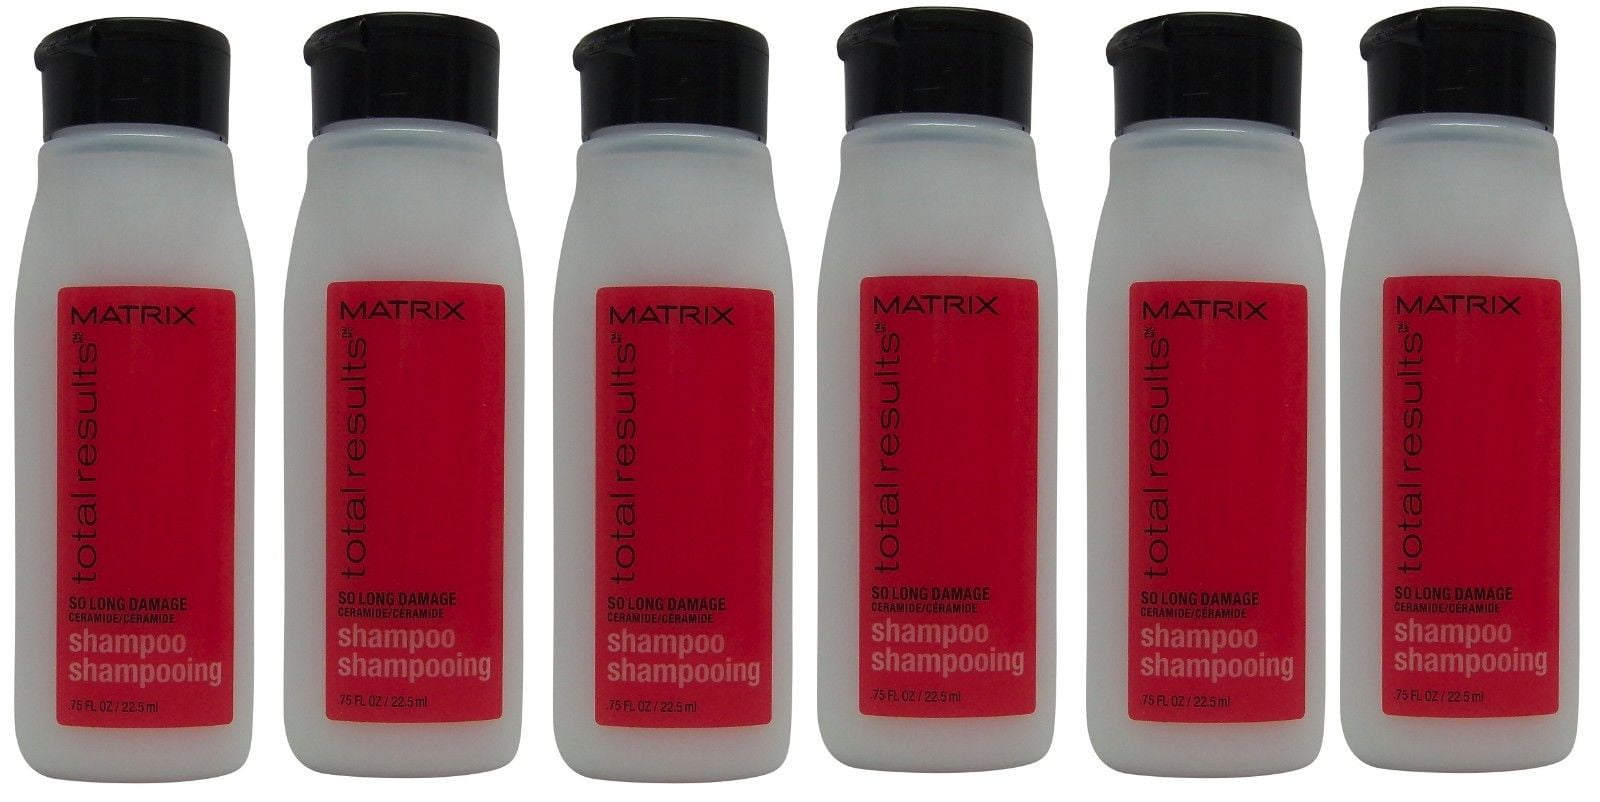 6. Matrix Total Results Brass Off Shampoo - wide 7